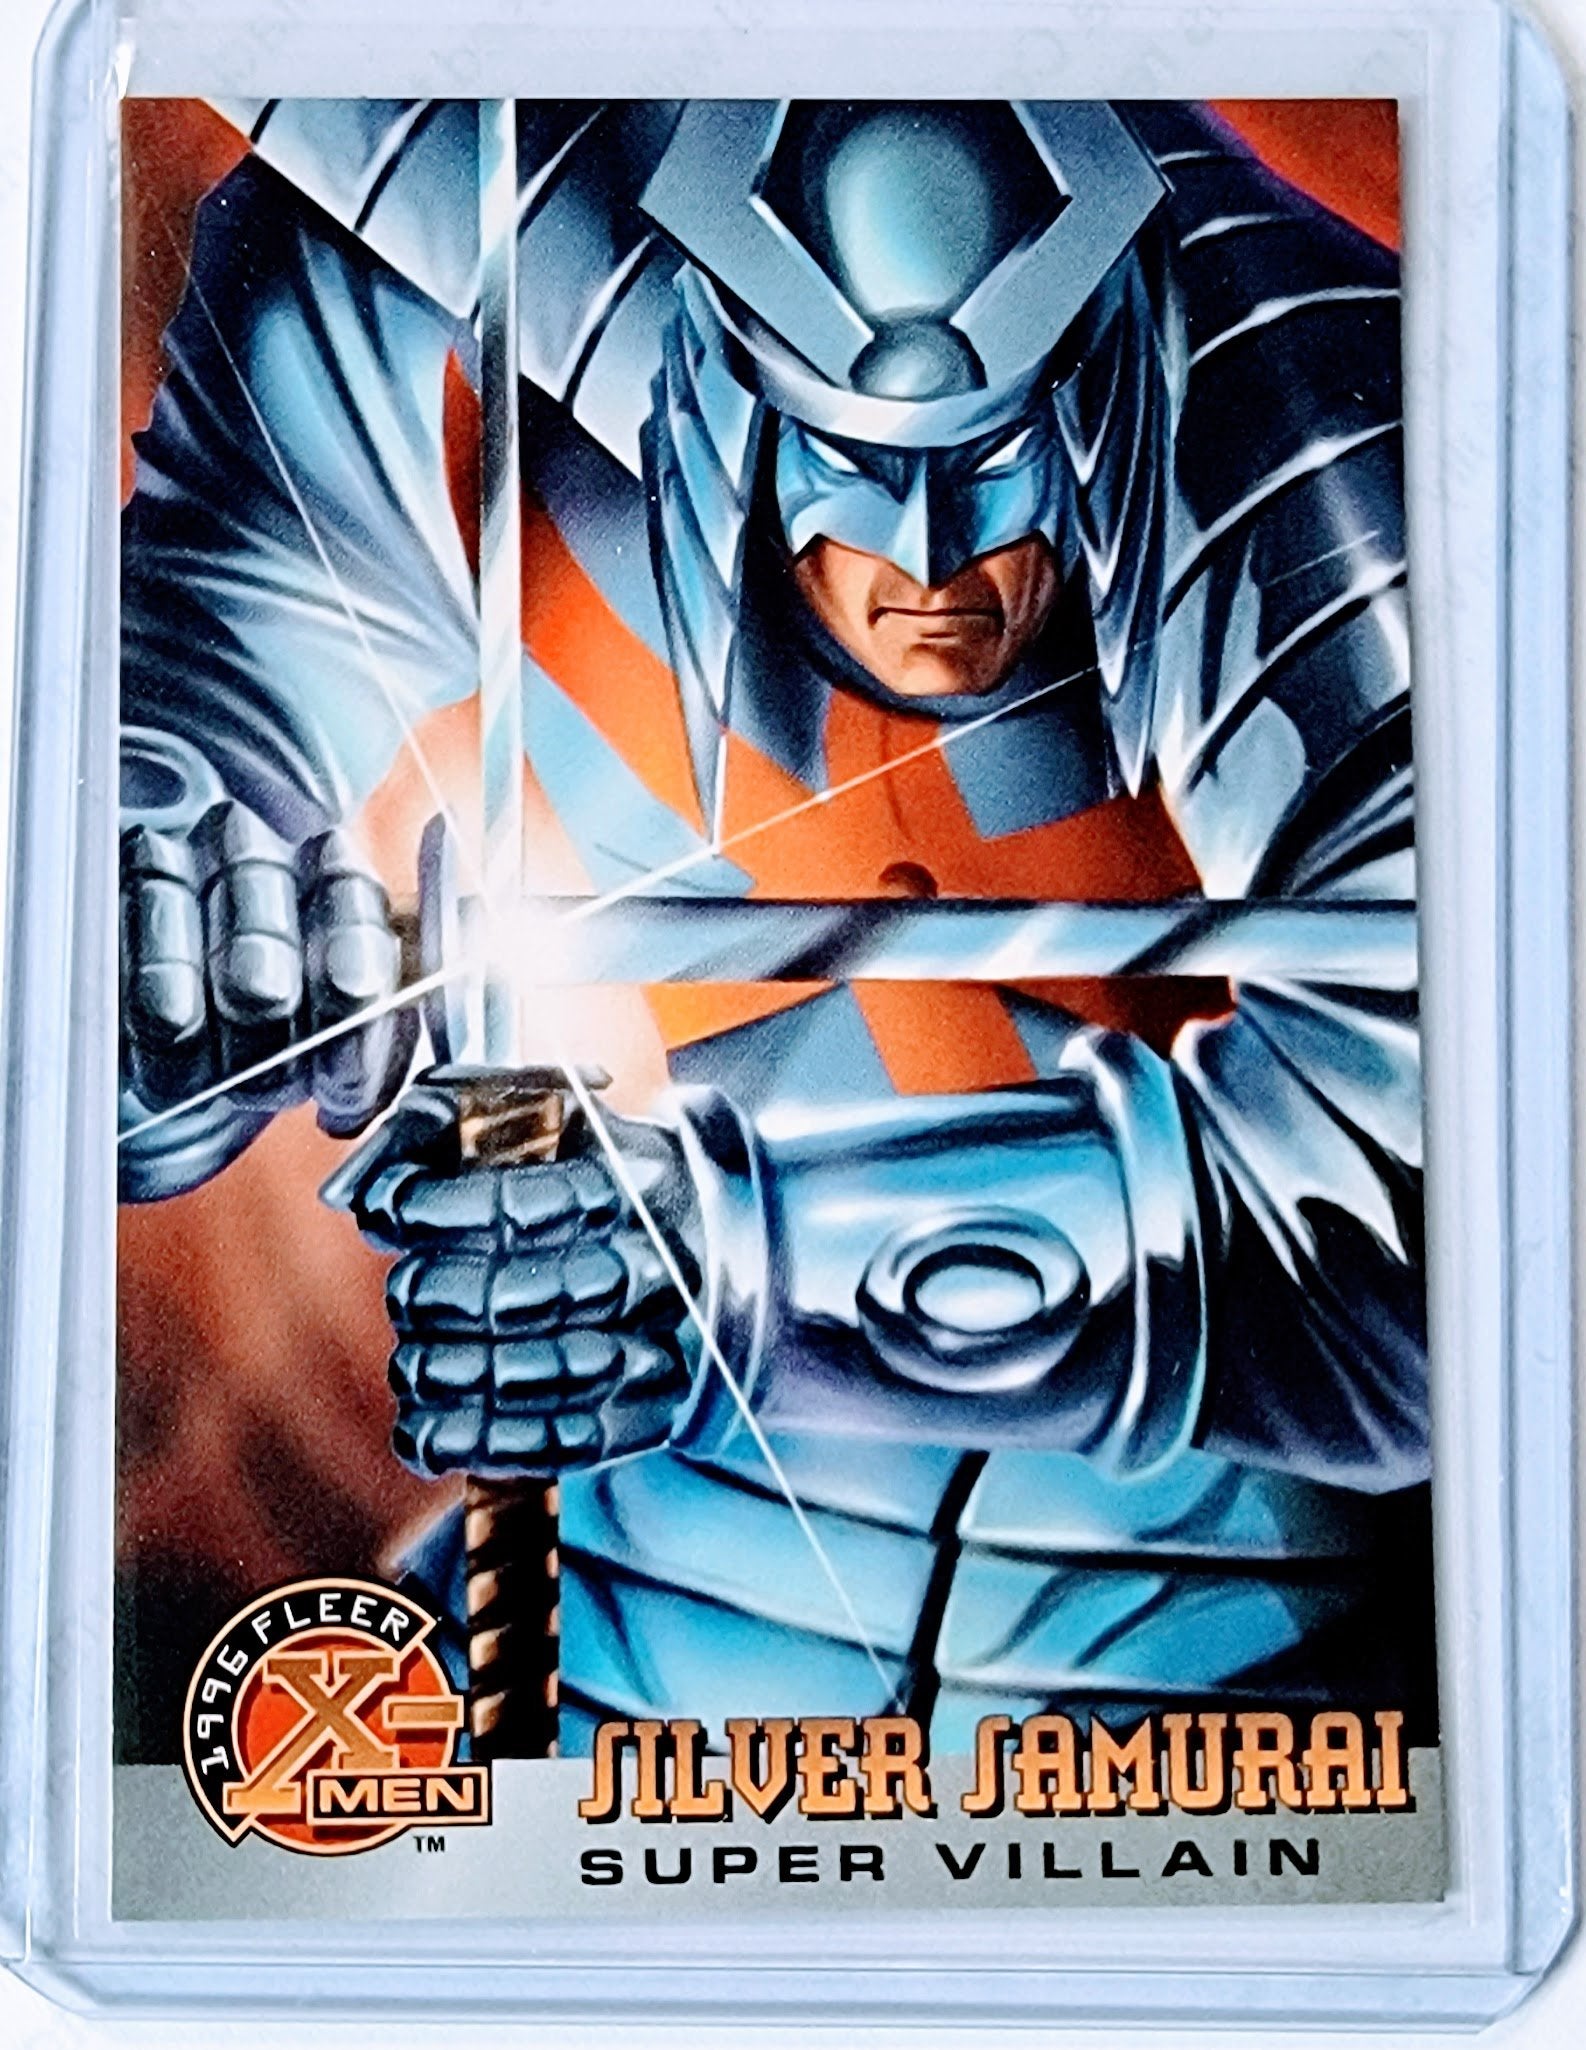 1996 Fleer X-Men Silver Samurai Super Villain Marvel Trading Card GRB1 simple Xclusive Collectibles   